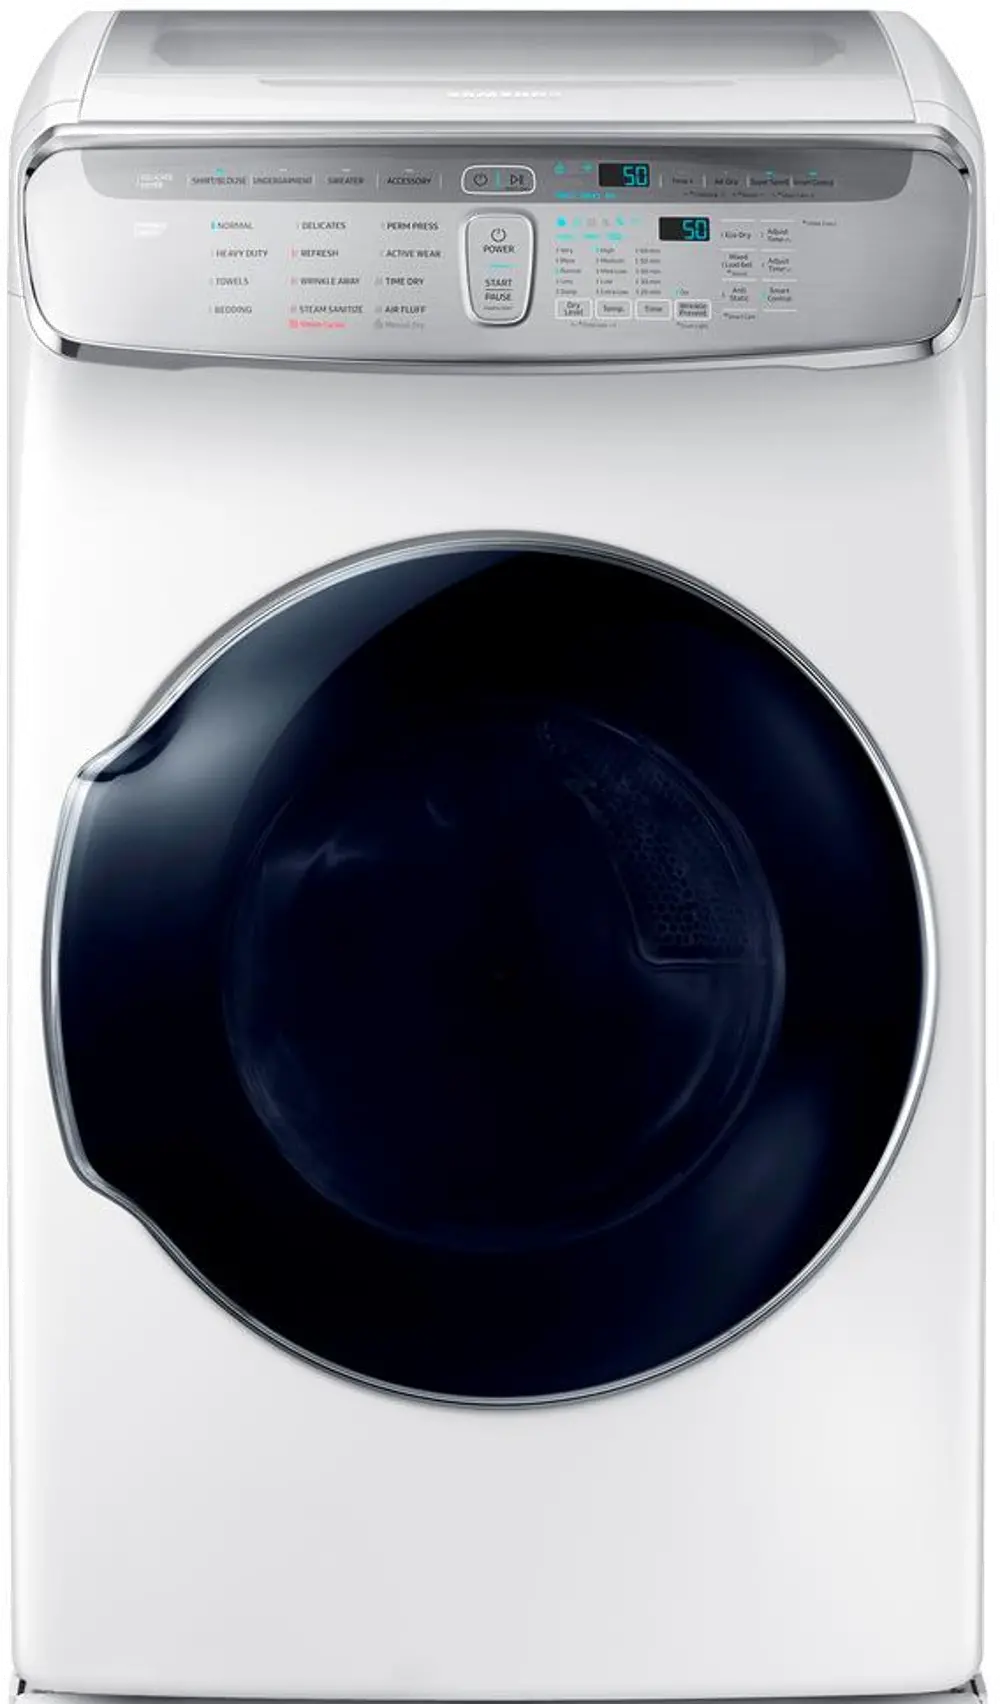 DVE60M9900W Samsung Electric FlexDry Dryer with Steam - 7.5 Cu. Ft. White-1